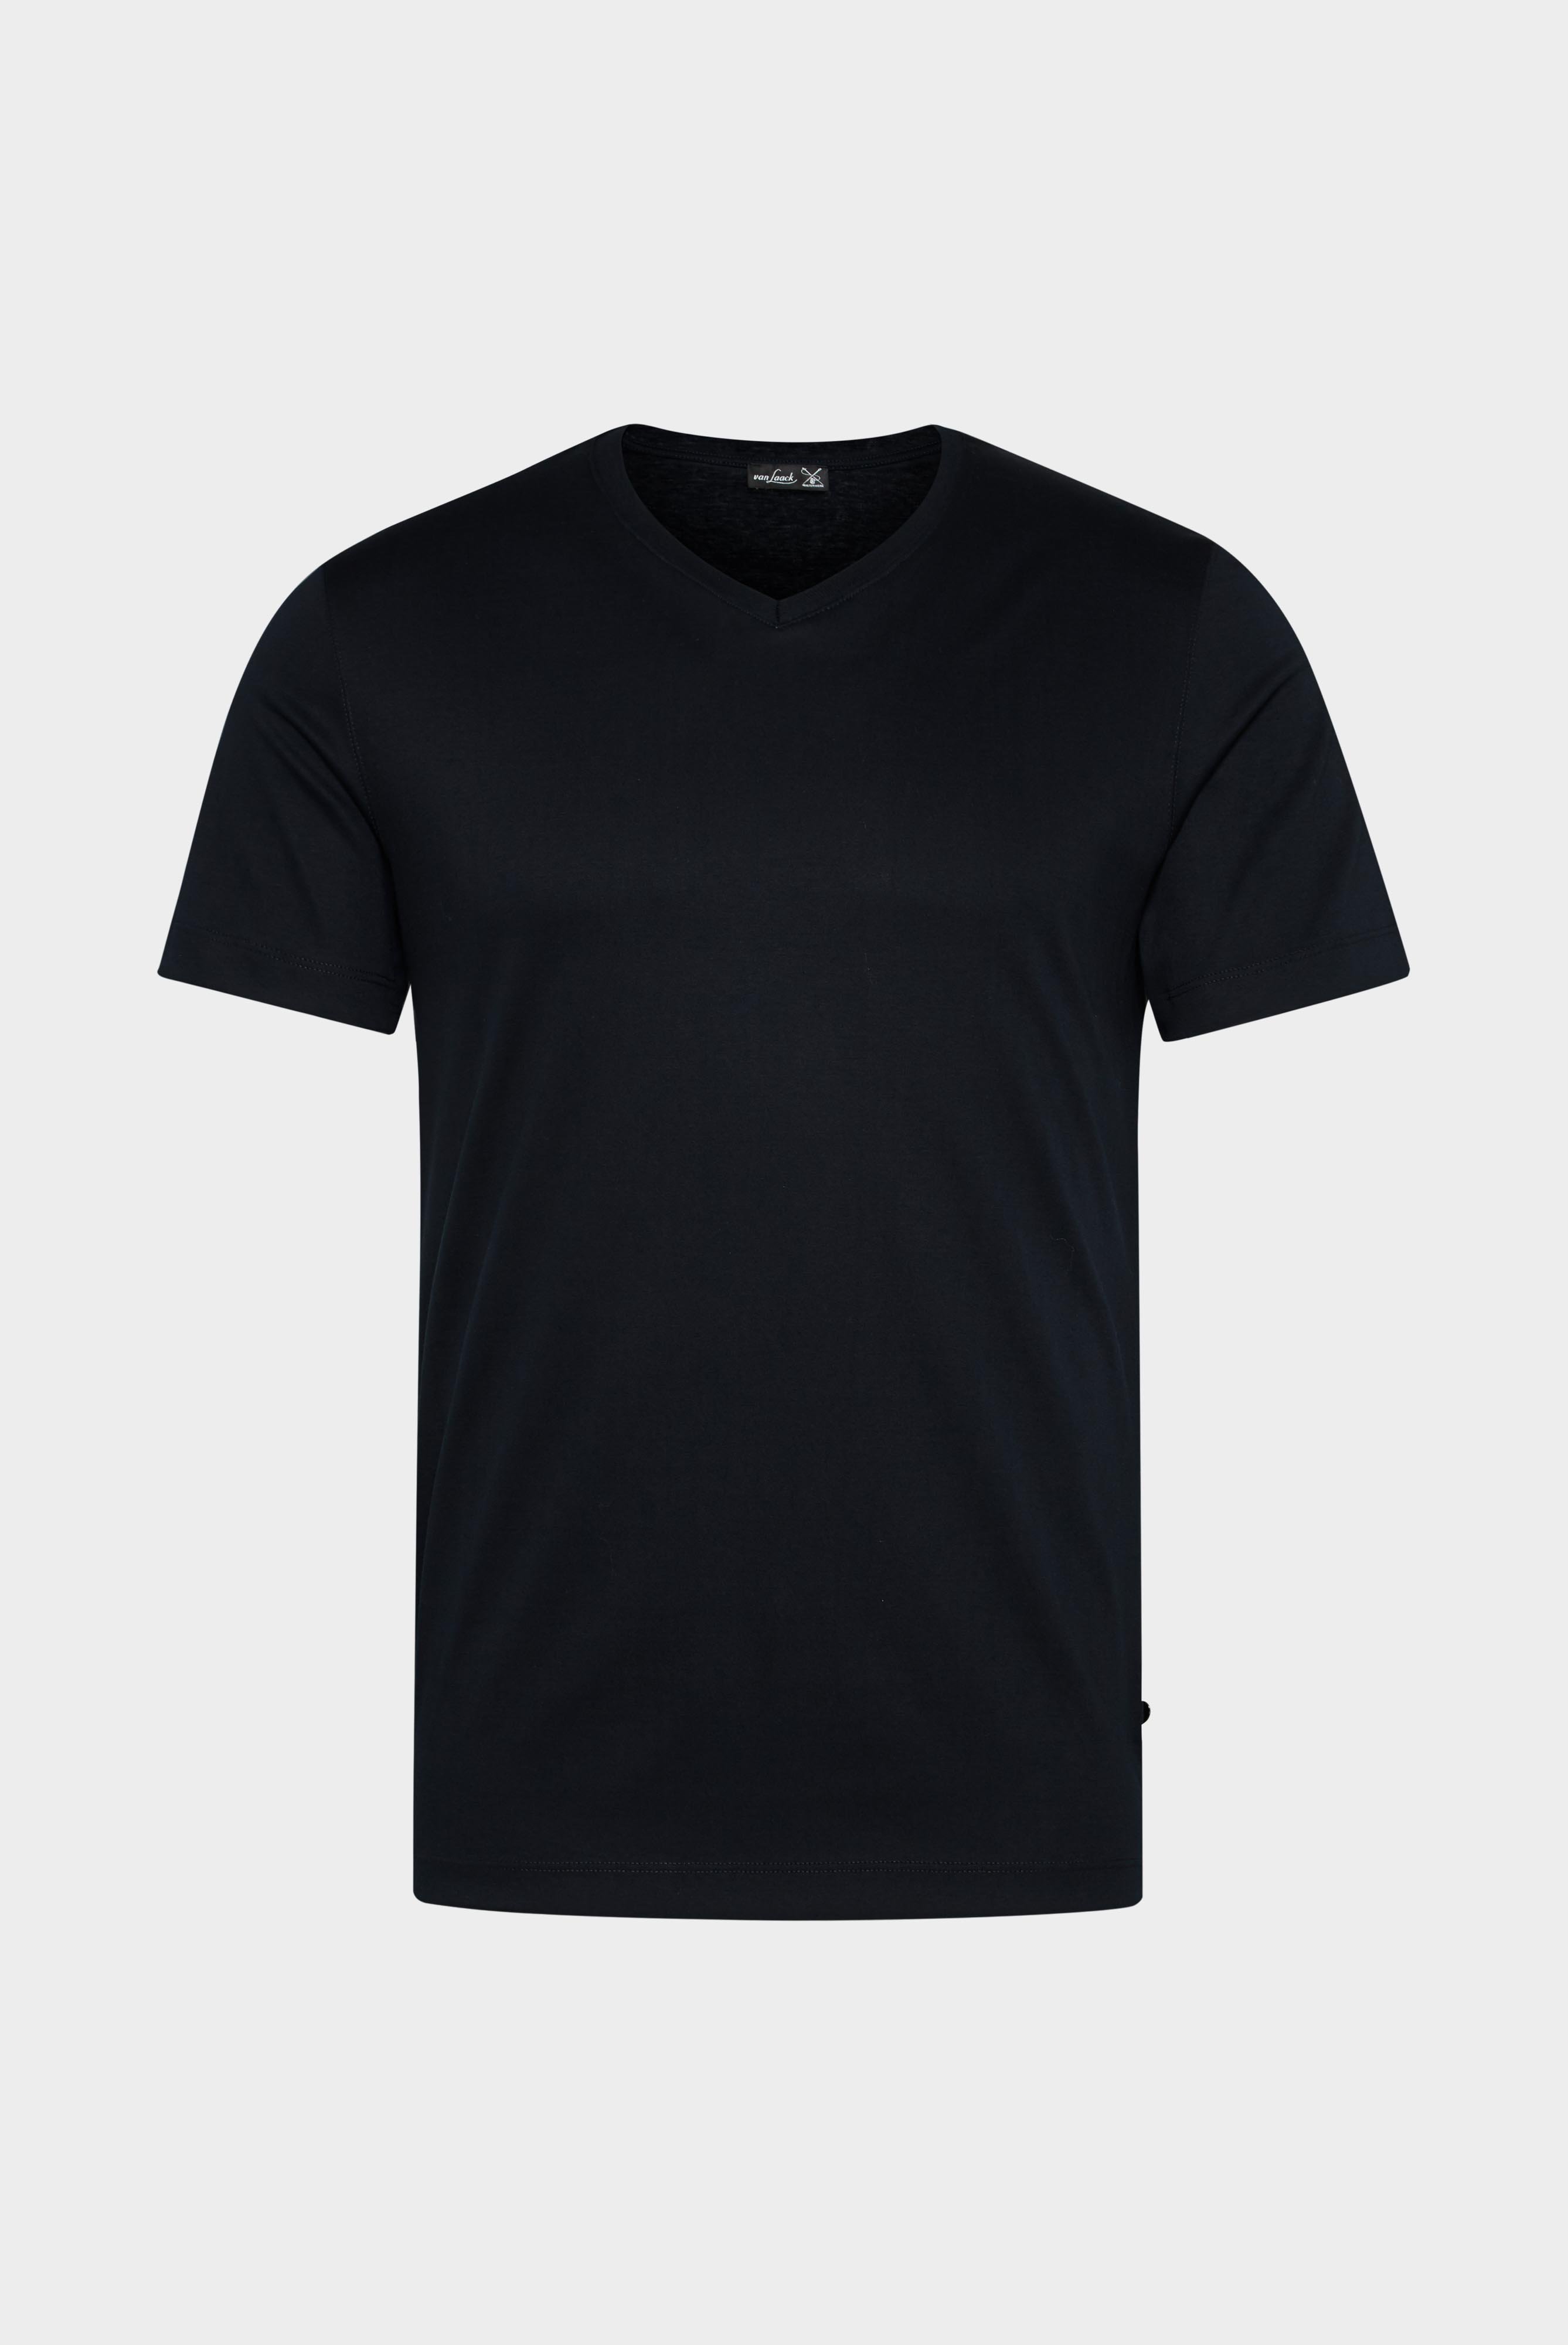 T-Shirts+Swiss Cotton Jersey V-Neck T-Shirt+20.1715.UX.180031.790.X3L